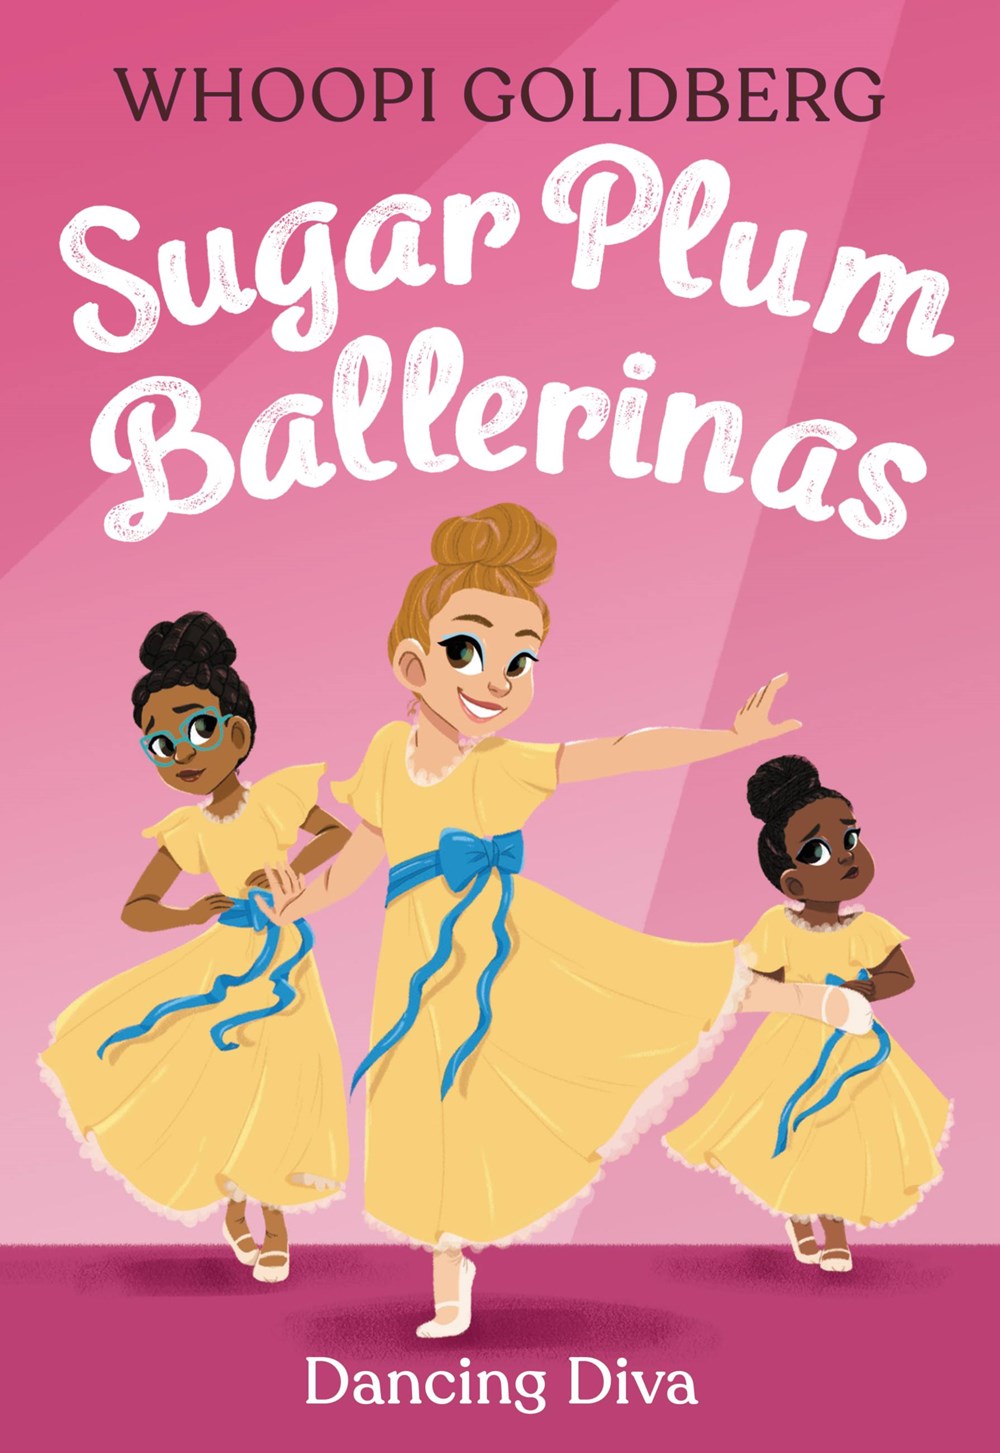 Sugar Plum Ballerinas: Dancing Diva by Whoopi Goldberg